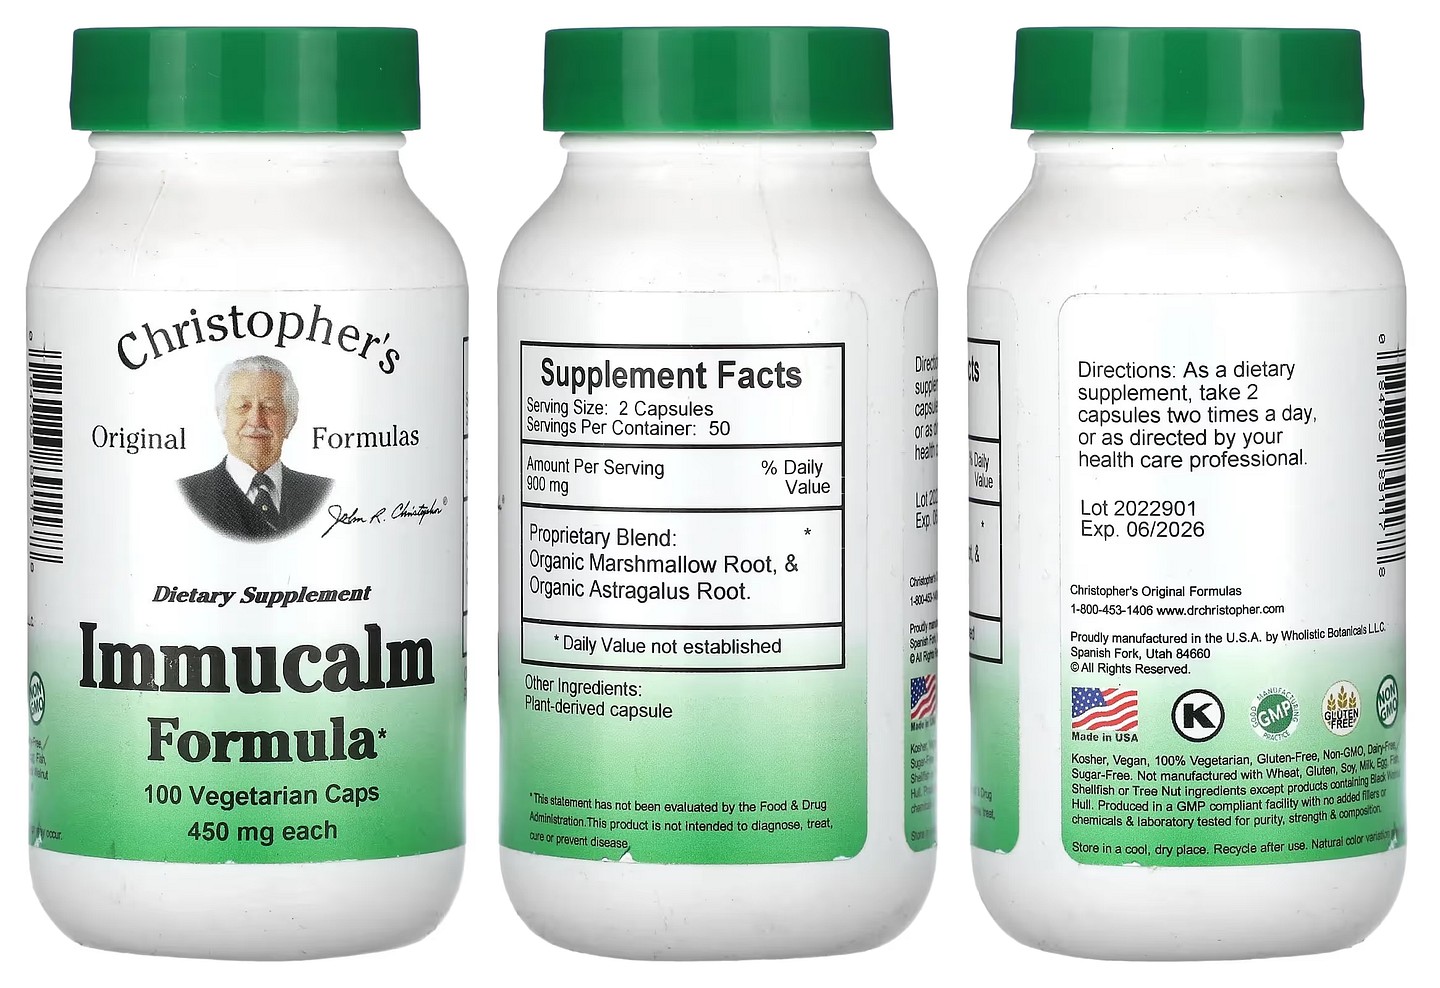 Dr. Christopher's, Immucalm Formula packaging